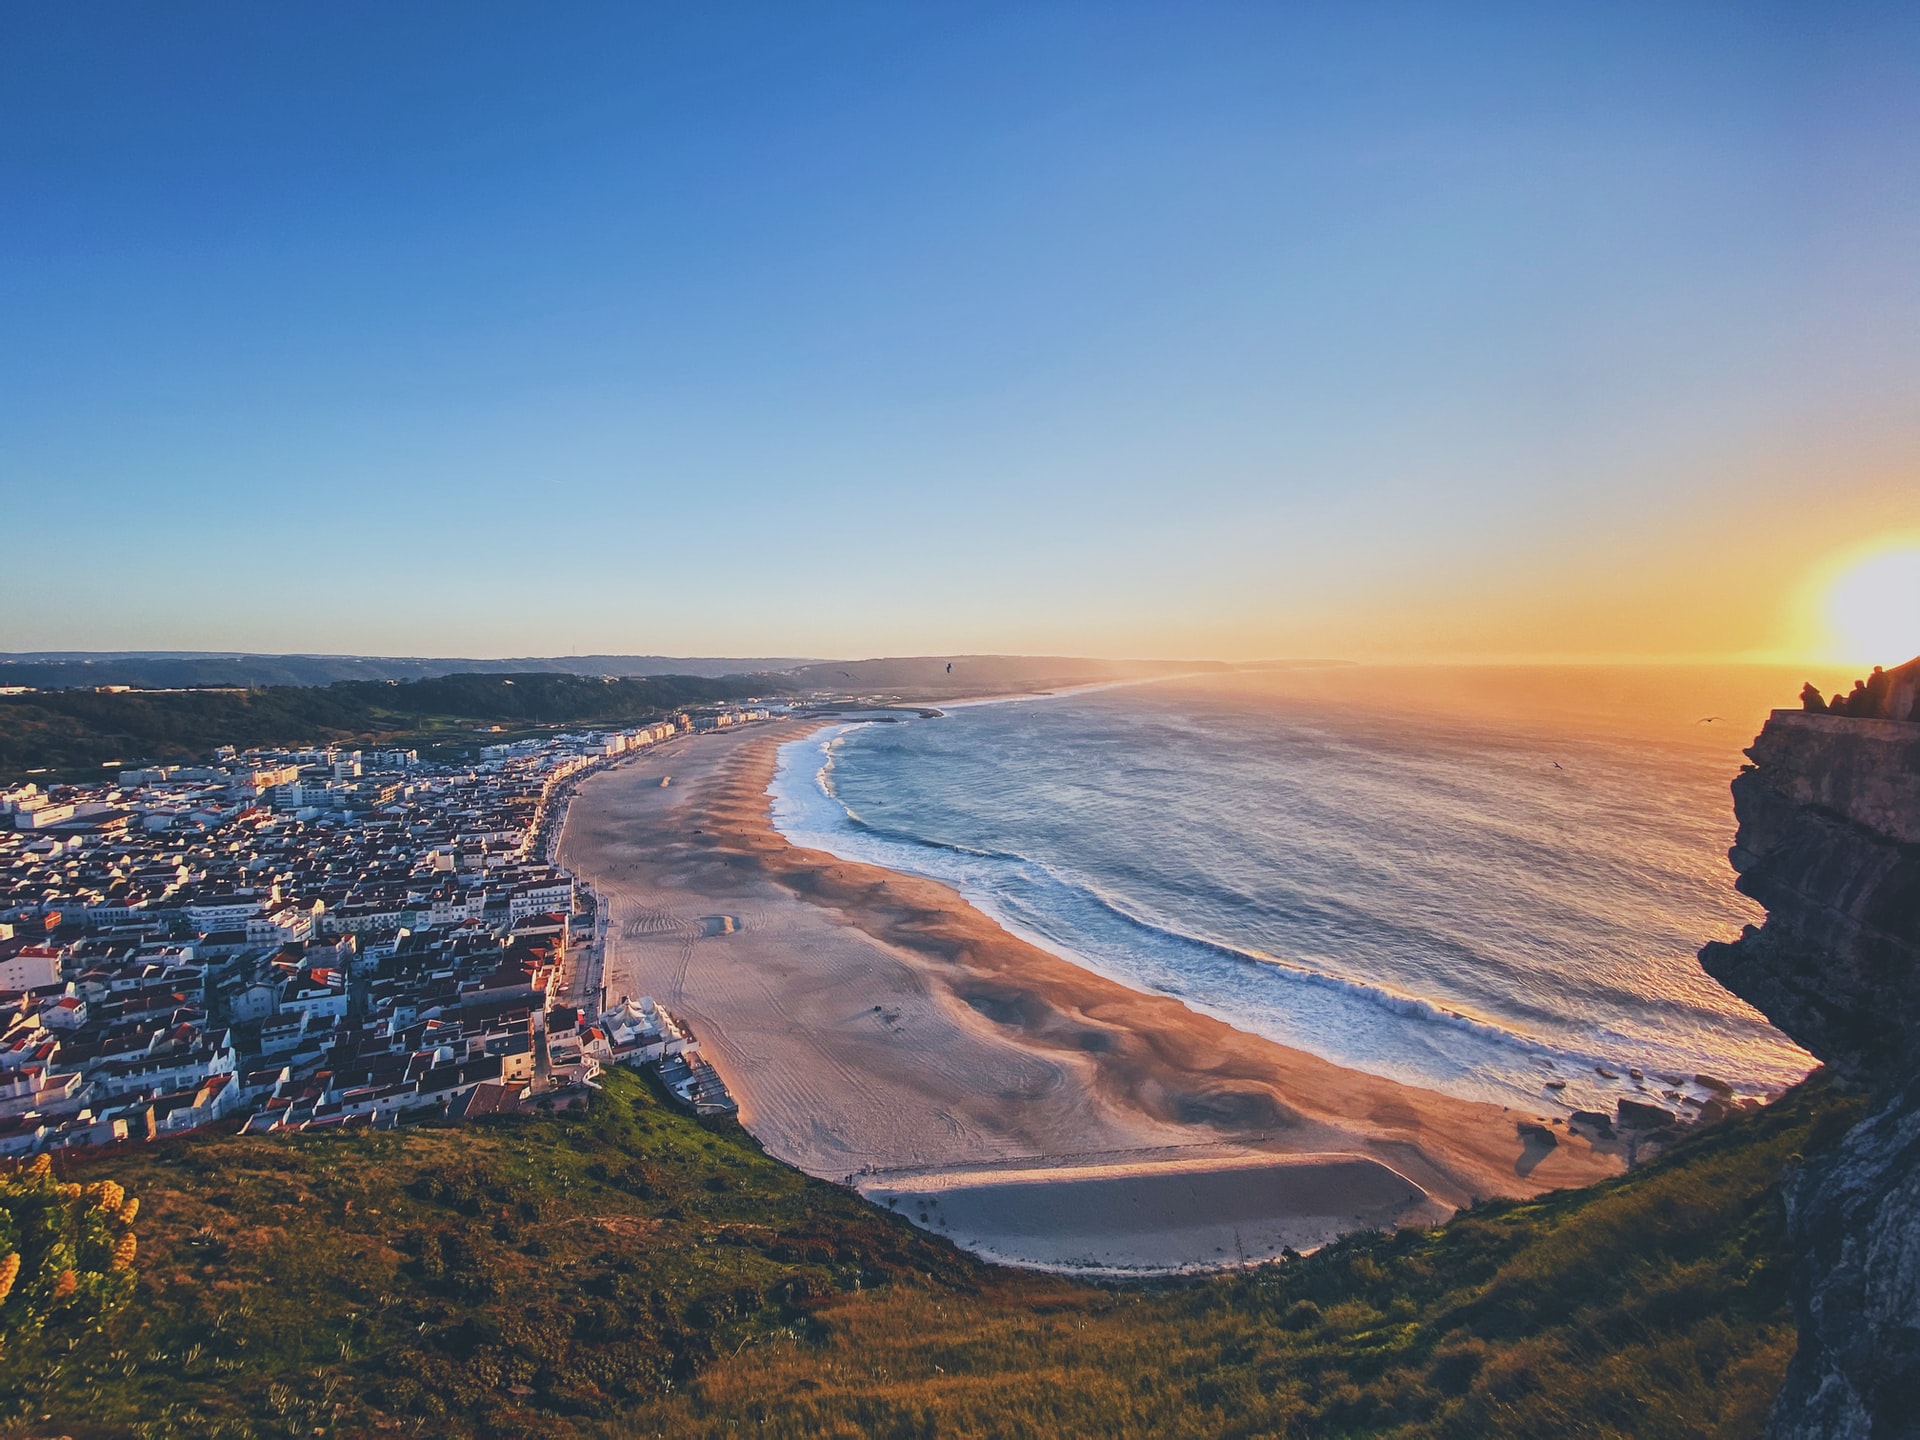 Vista panorâmica da praia de Nazaré em Portugal